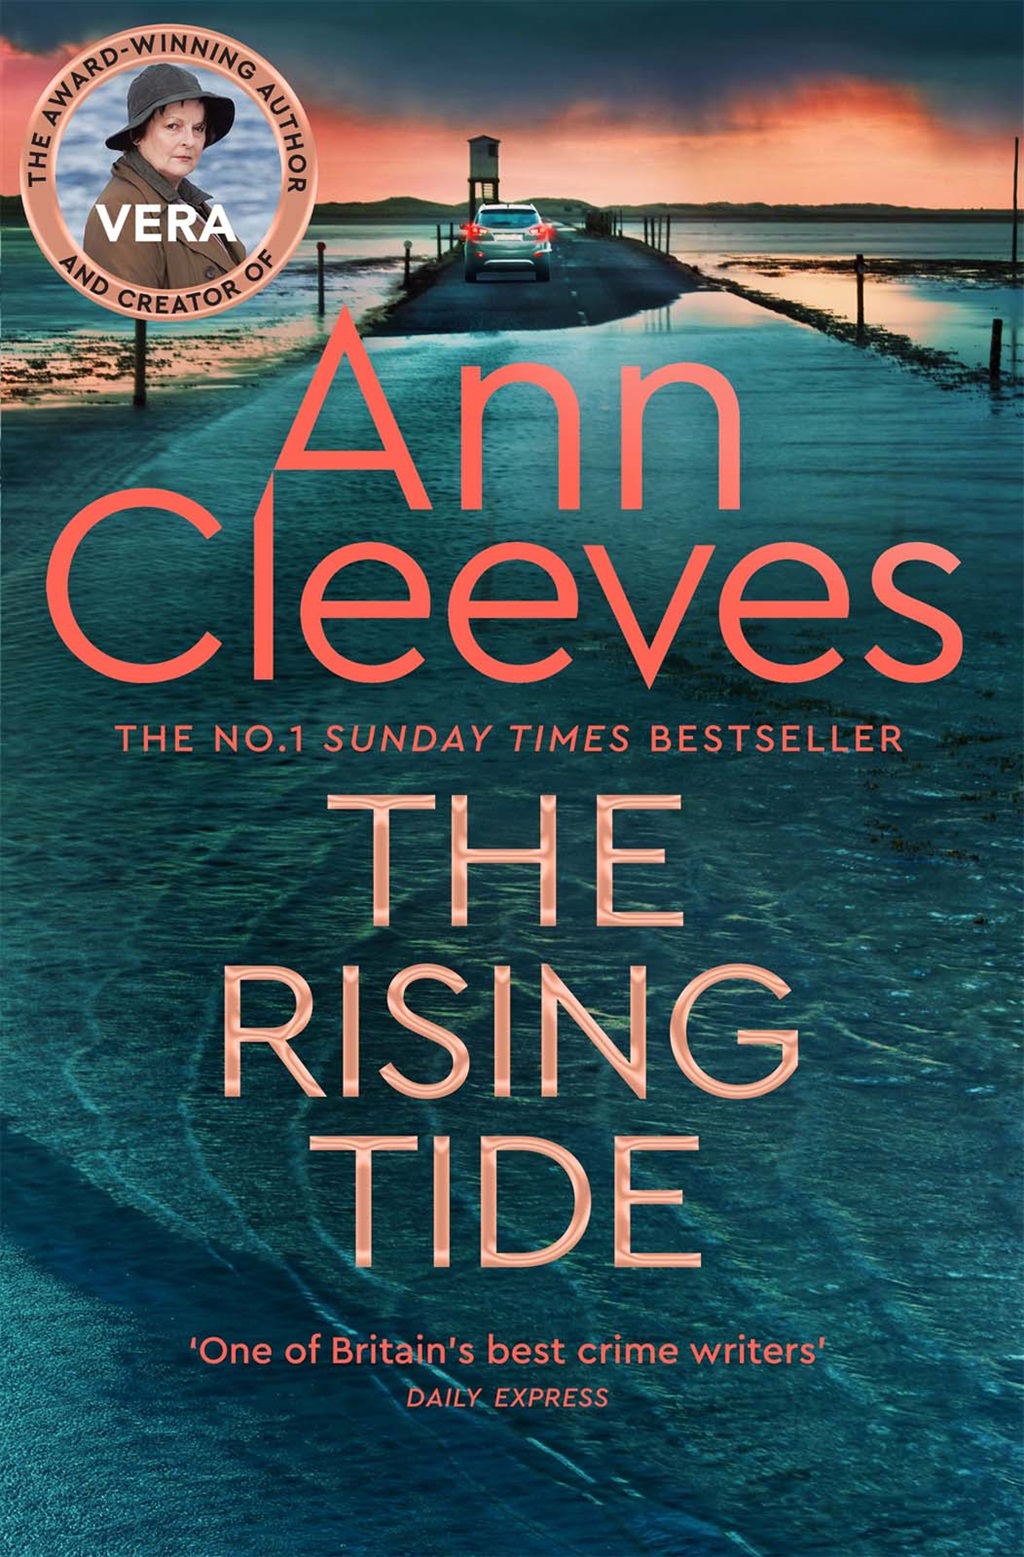 The Rising Tide by Ann Cleeves (Macmillan).